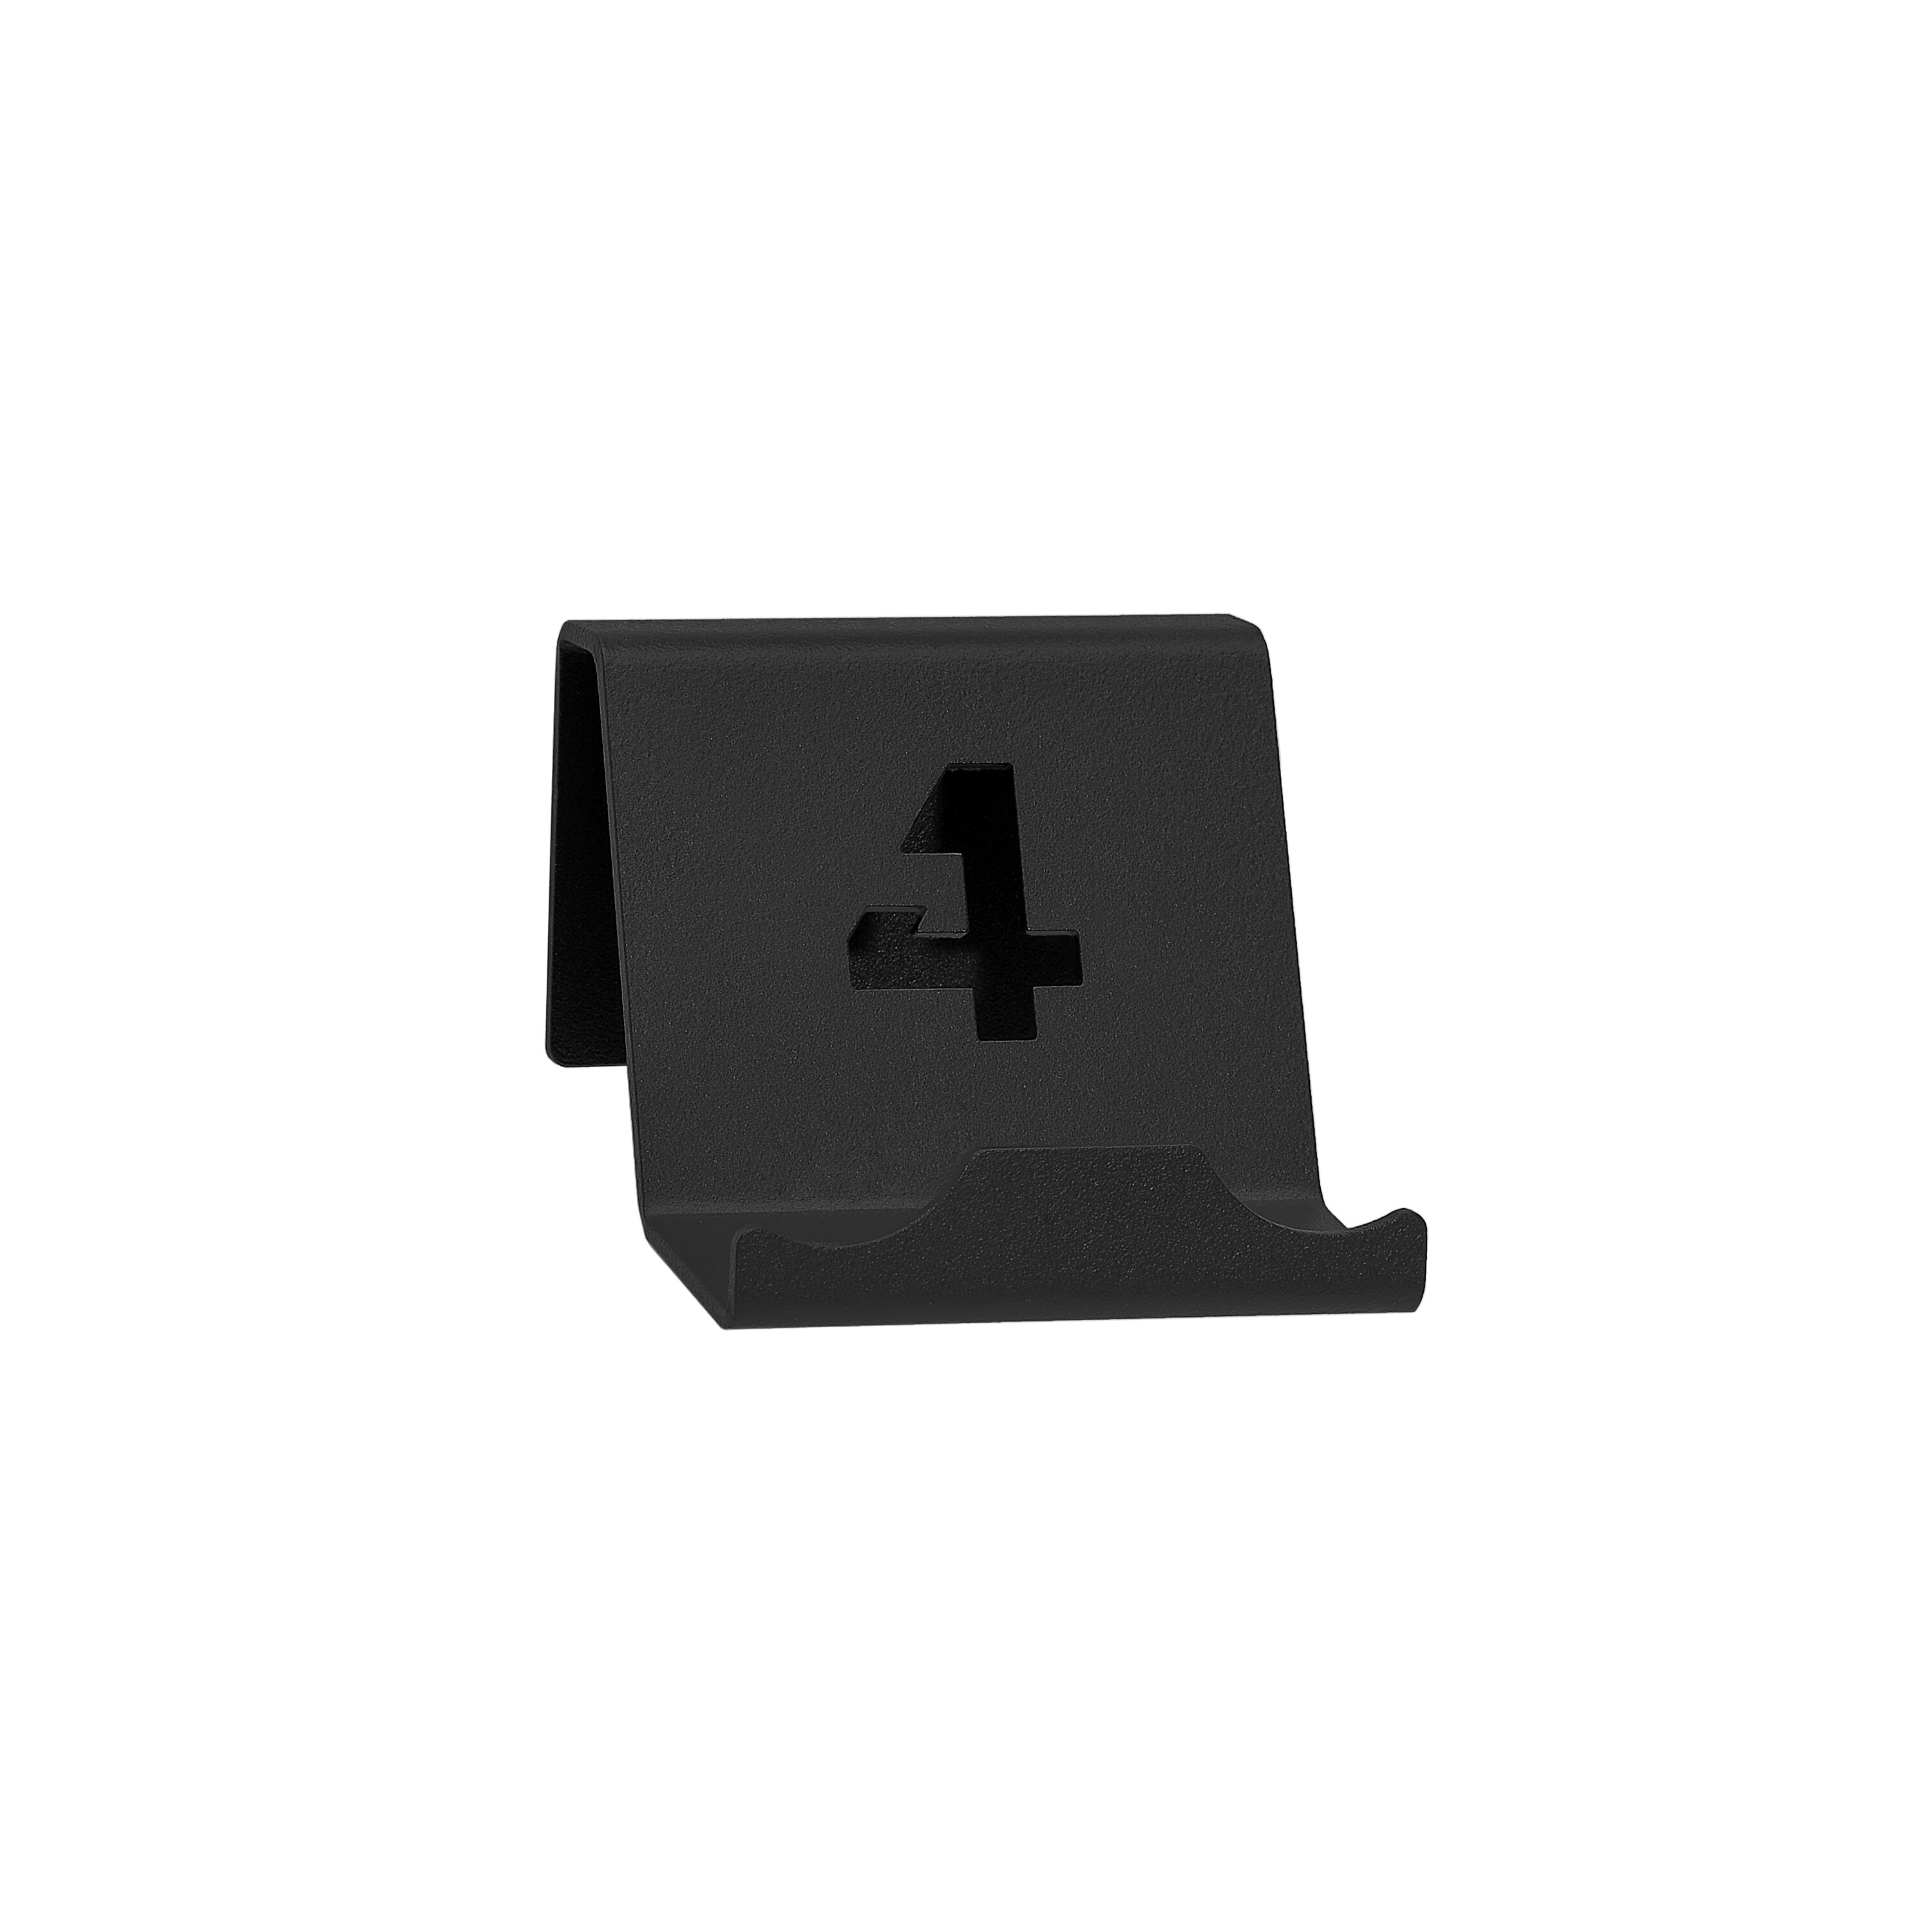 4MOUNT WALL MOUNT FOR PS4 PLAYSTATION 4 SLIM BLACK SET - 10